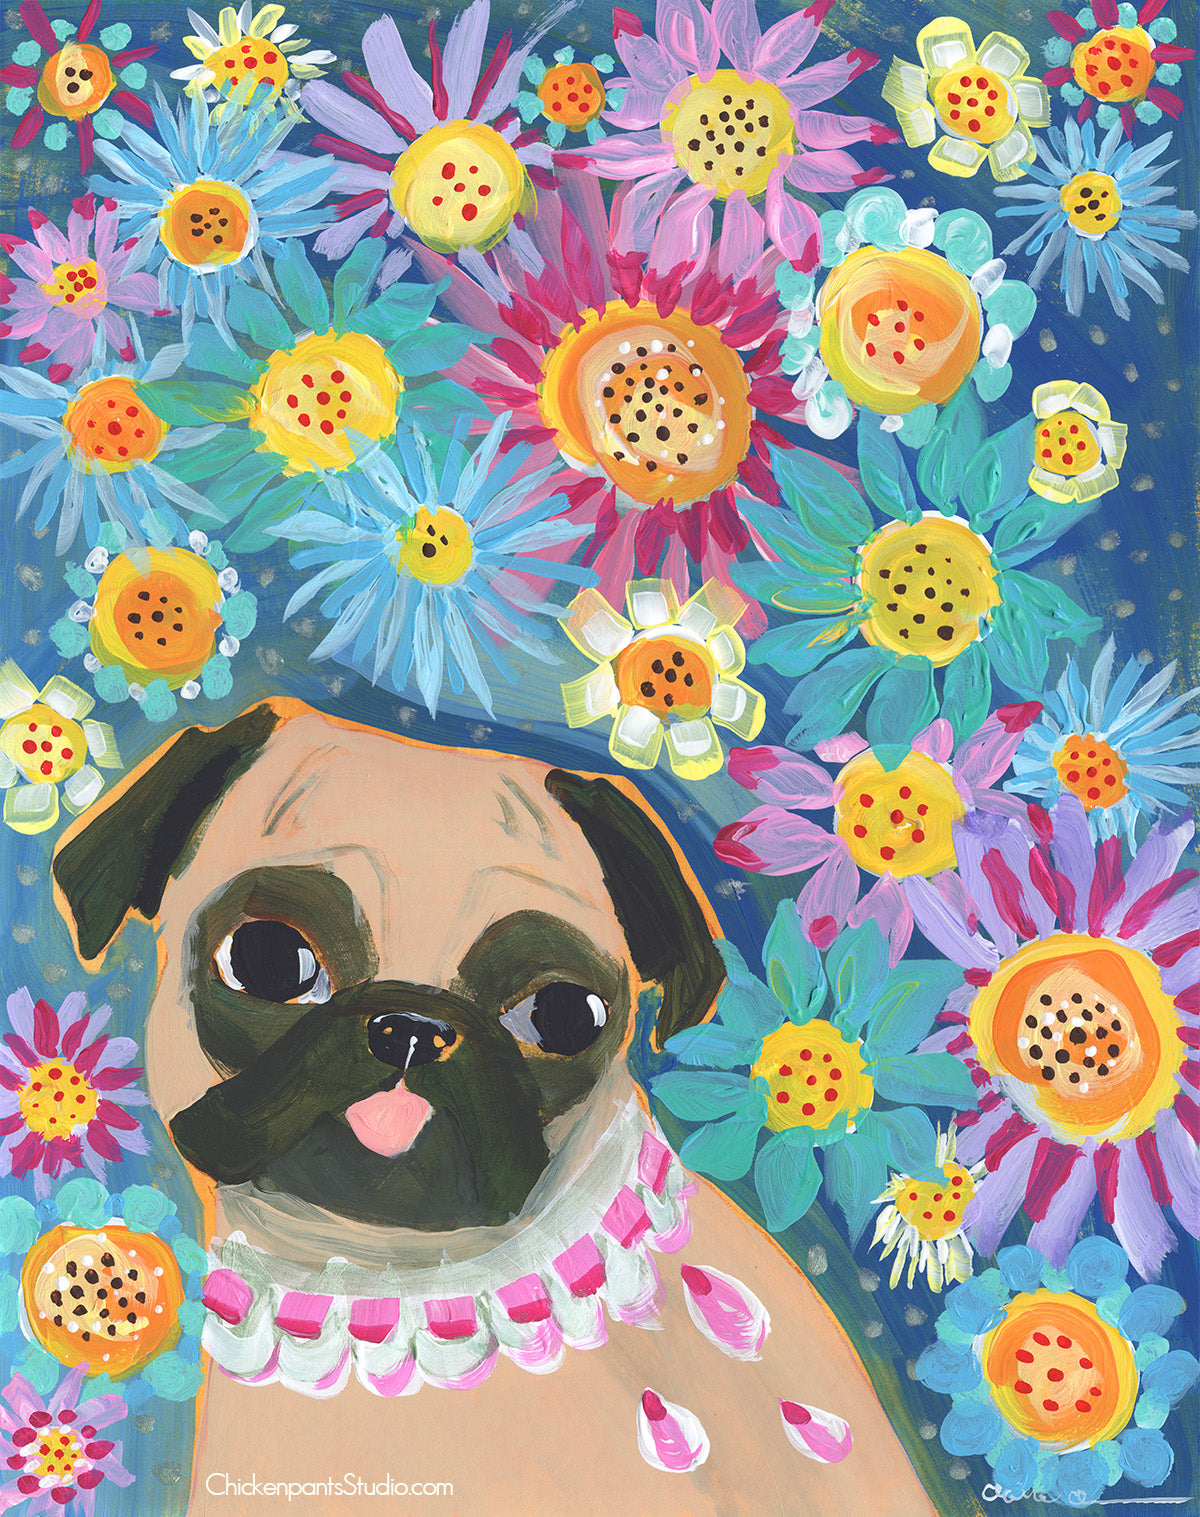 Floral - Original Pug Painting